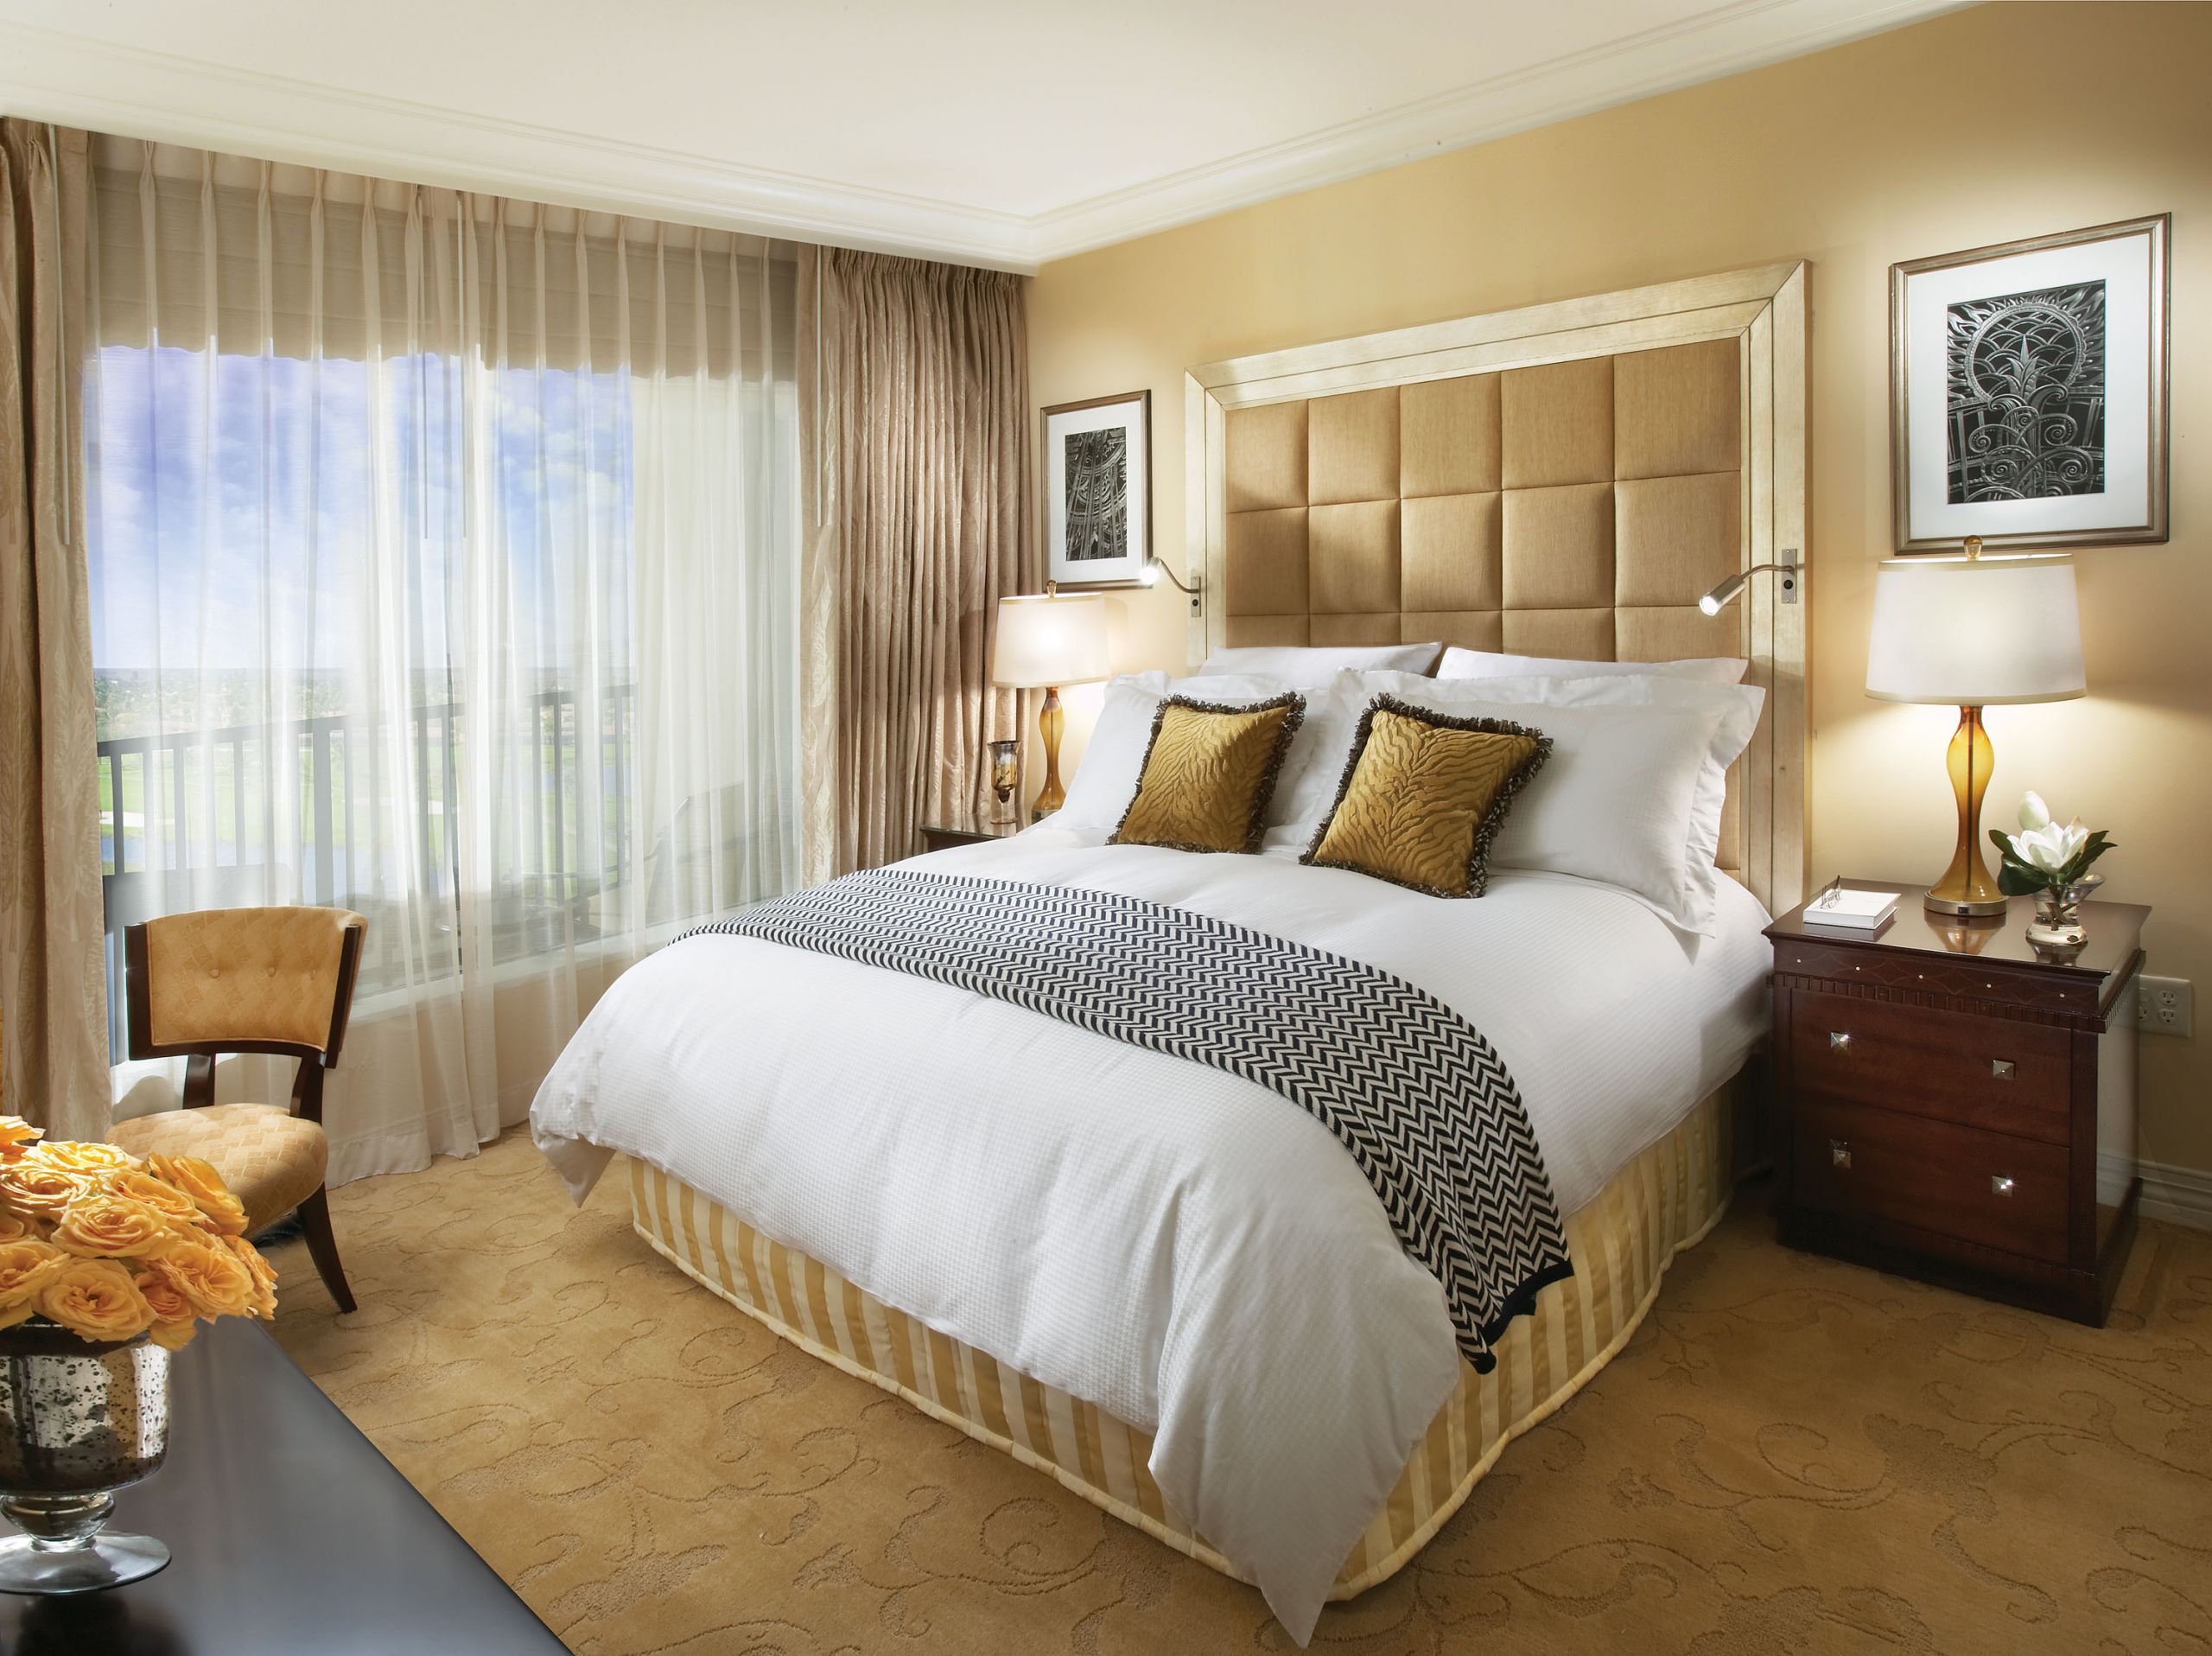 Cute Bedroom Decor Fresh Cute Bedroom Ideas Classical Decorations Versus Modern Design